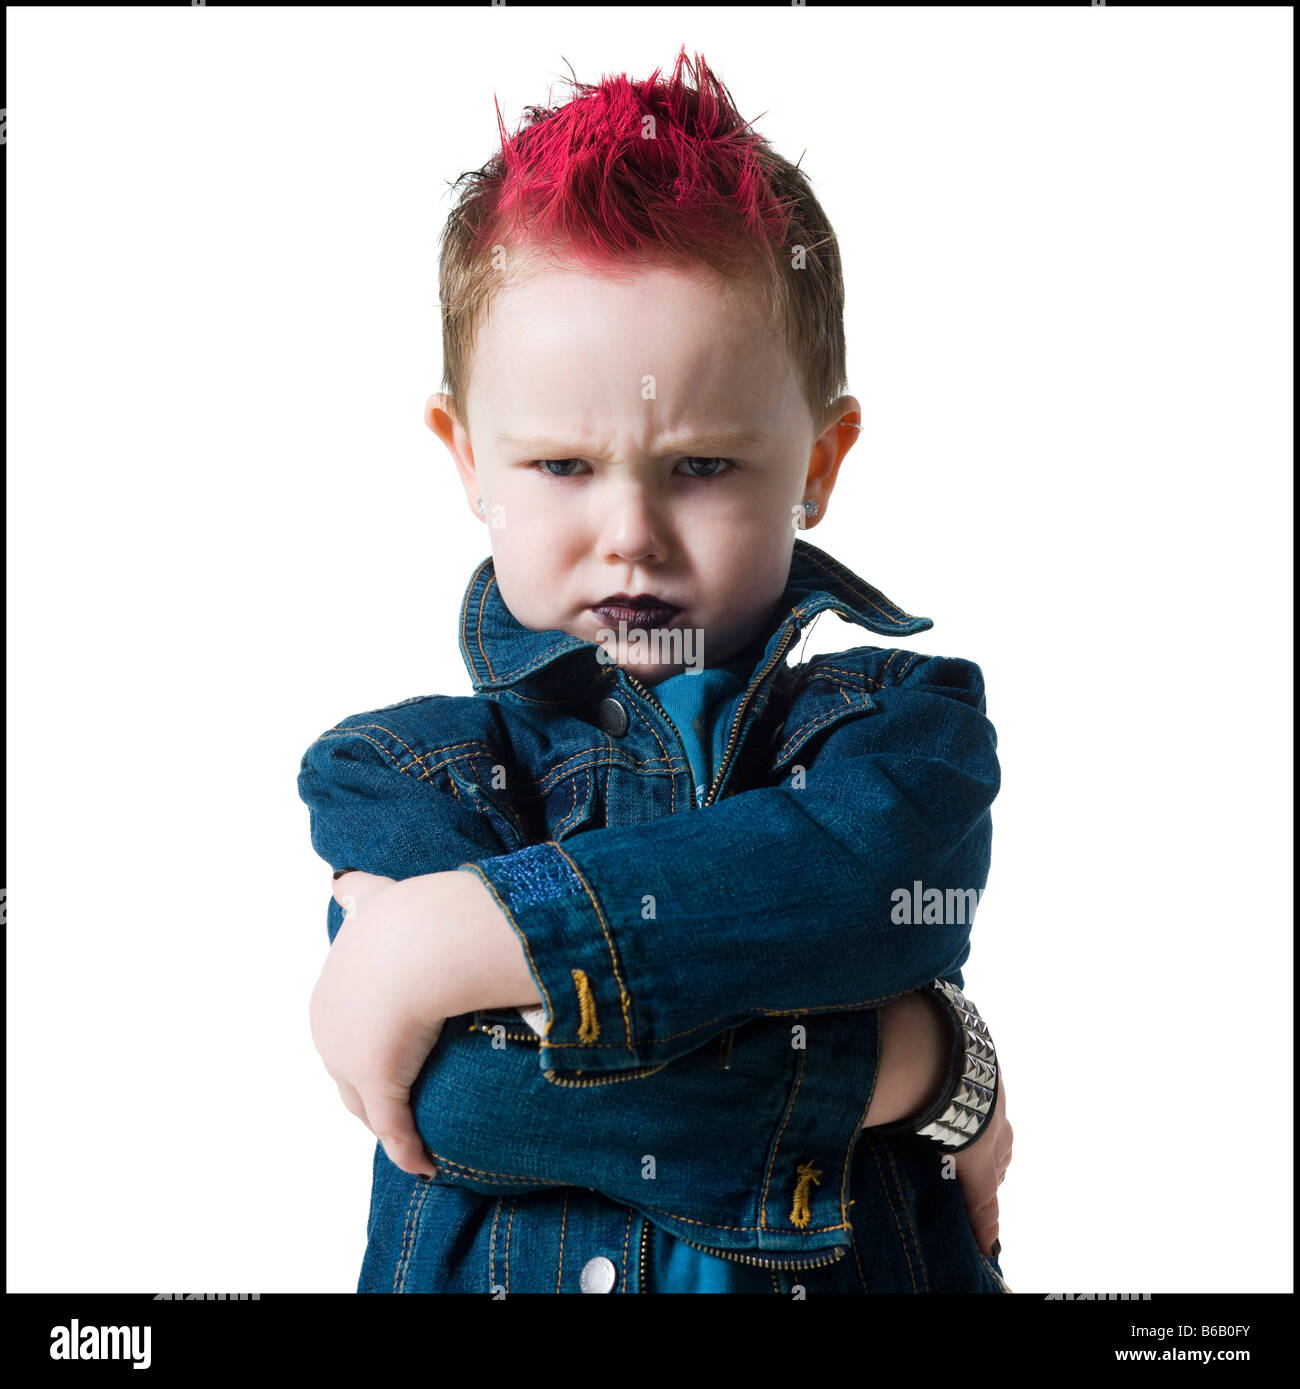 Punk Boy Stock Photos & Punk Boy Stock Images - Alamy